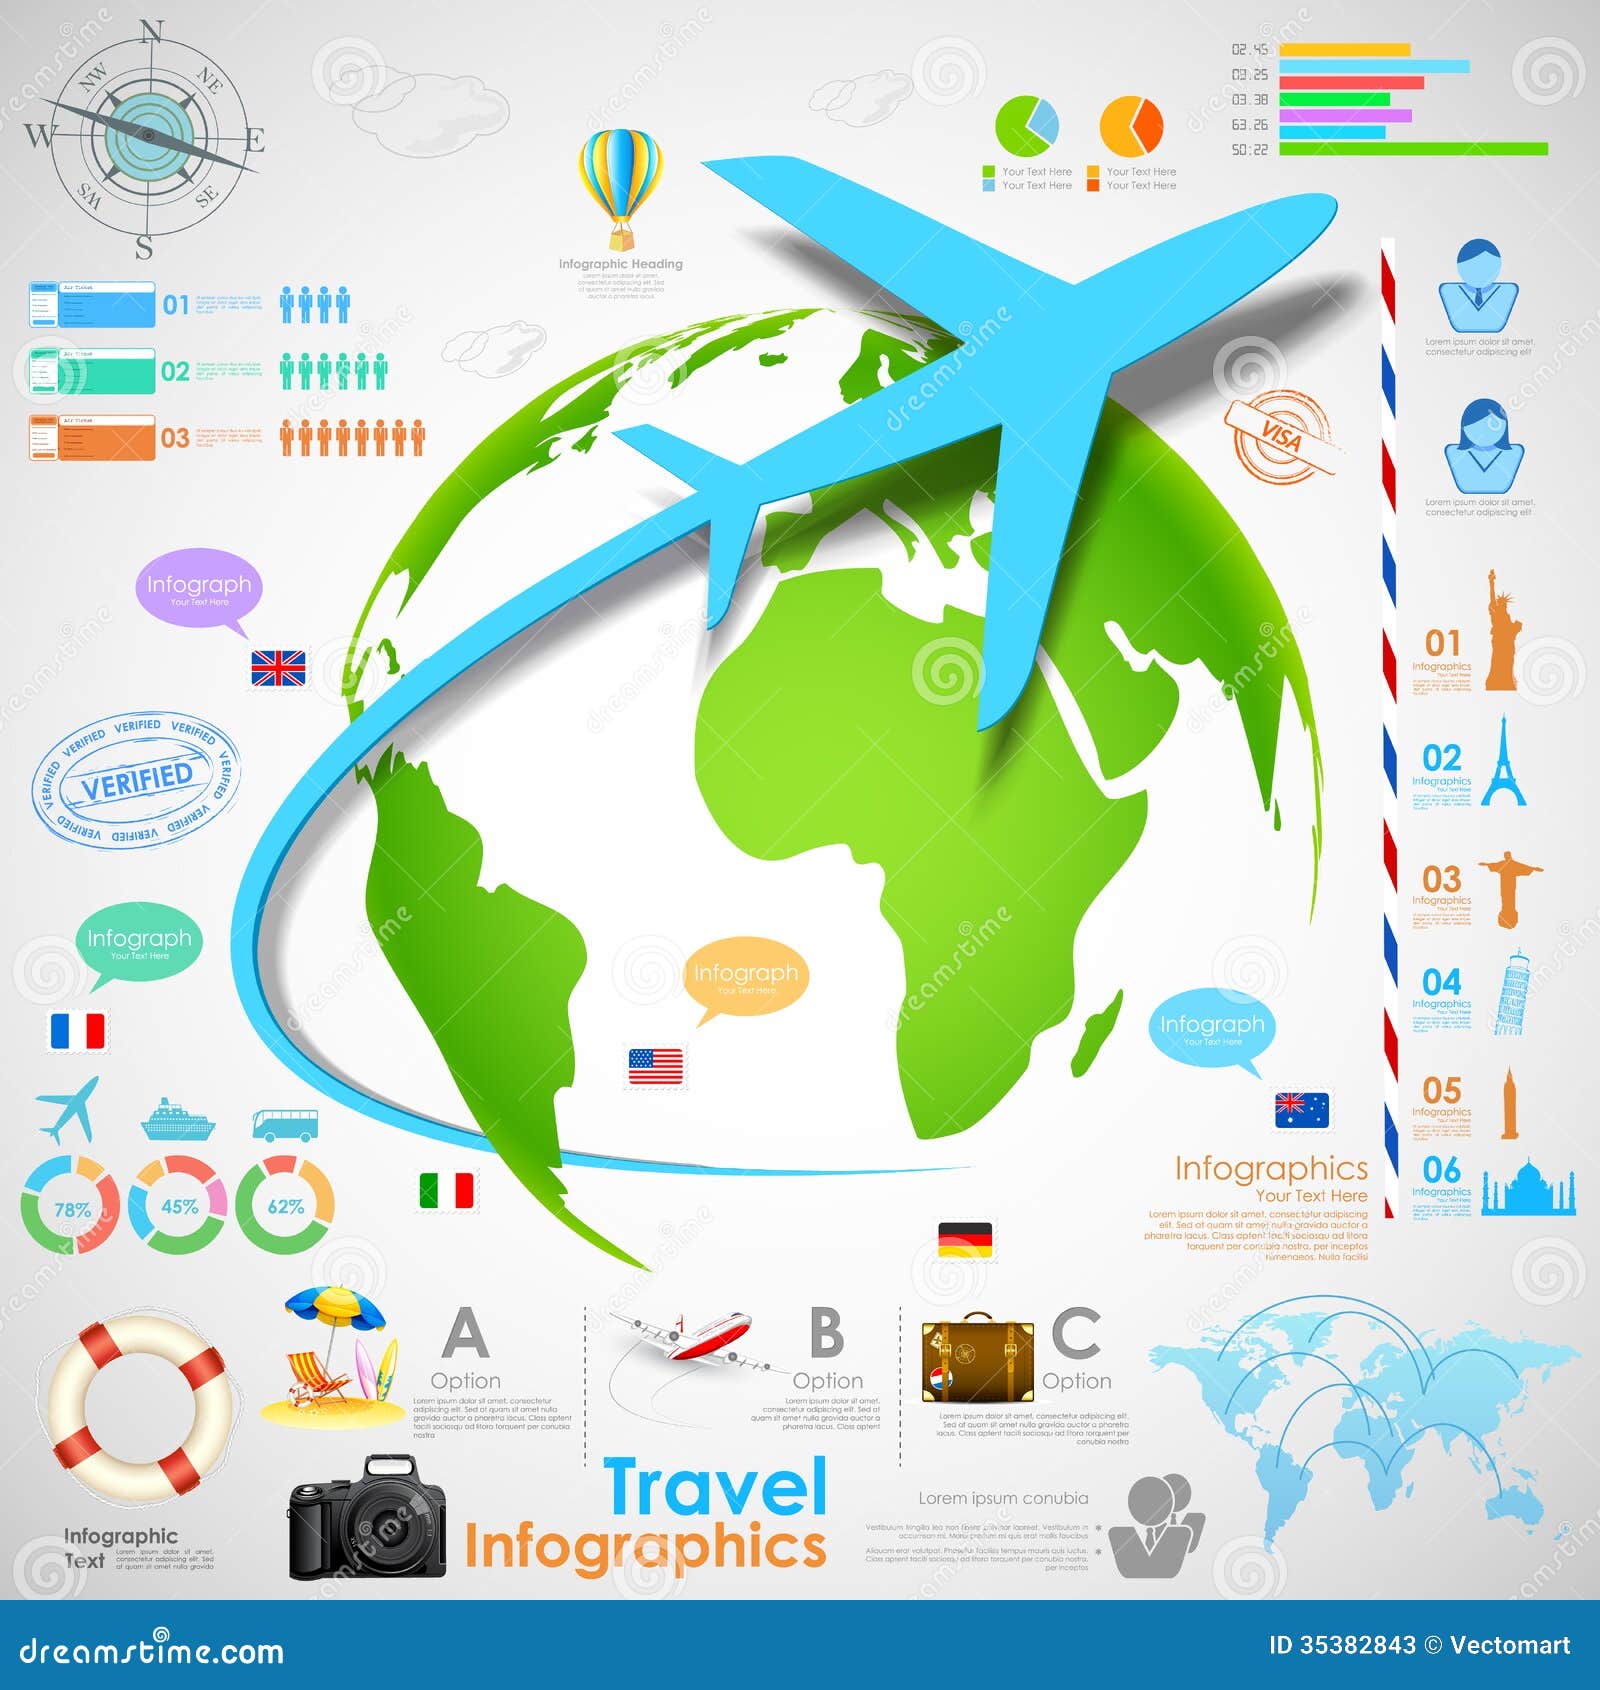 Travel Infographic Chart Stock Photos - Image: 35382843